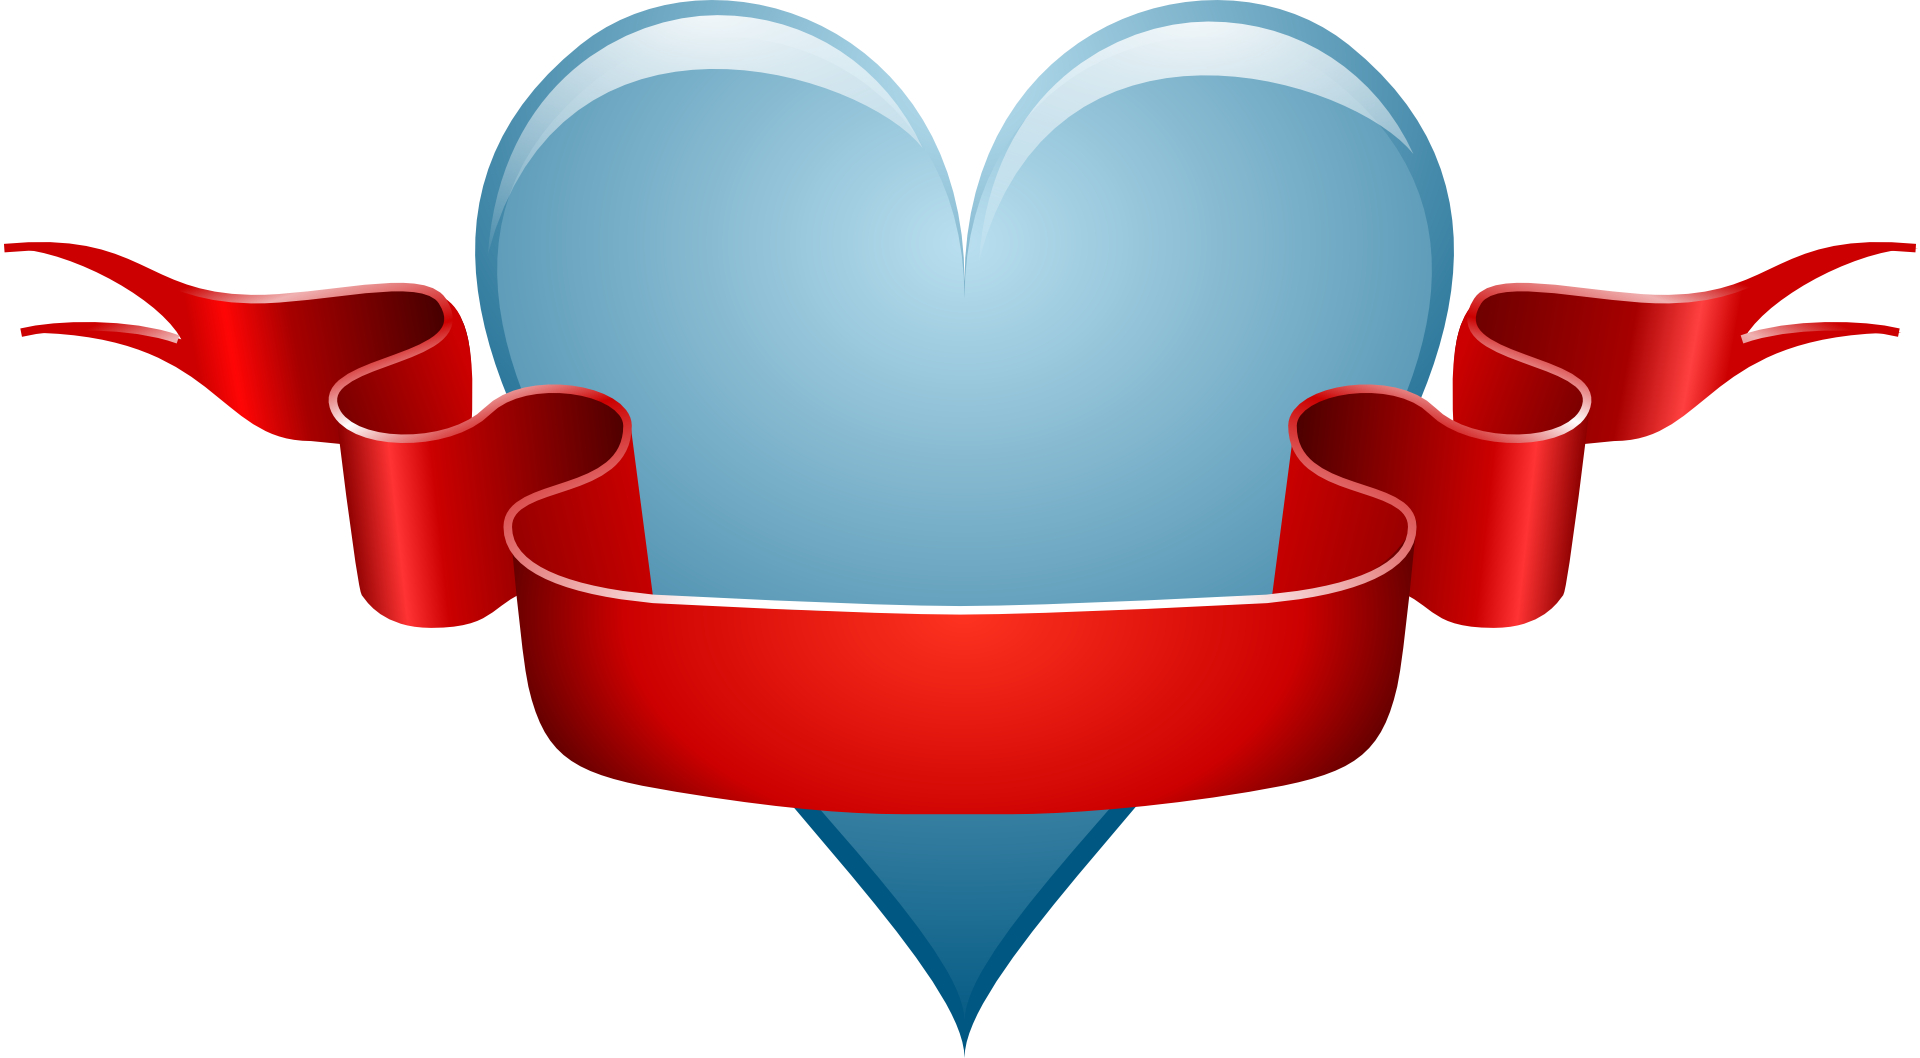 Heart Ribbon drawing free image download